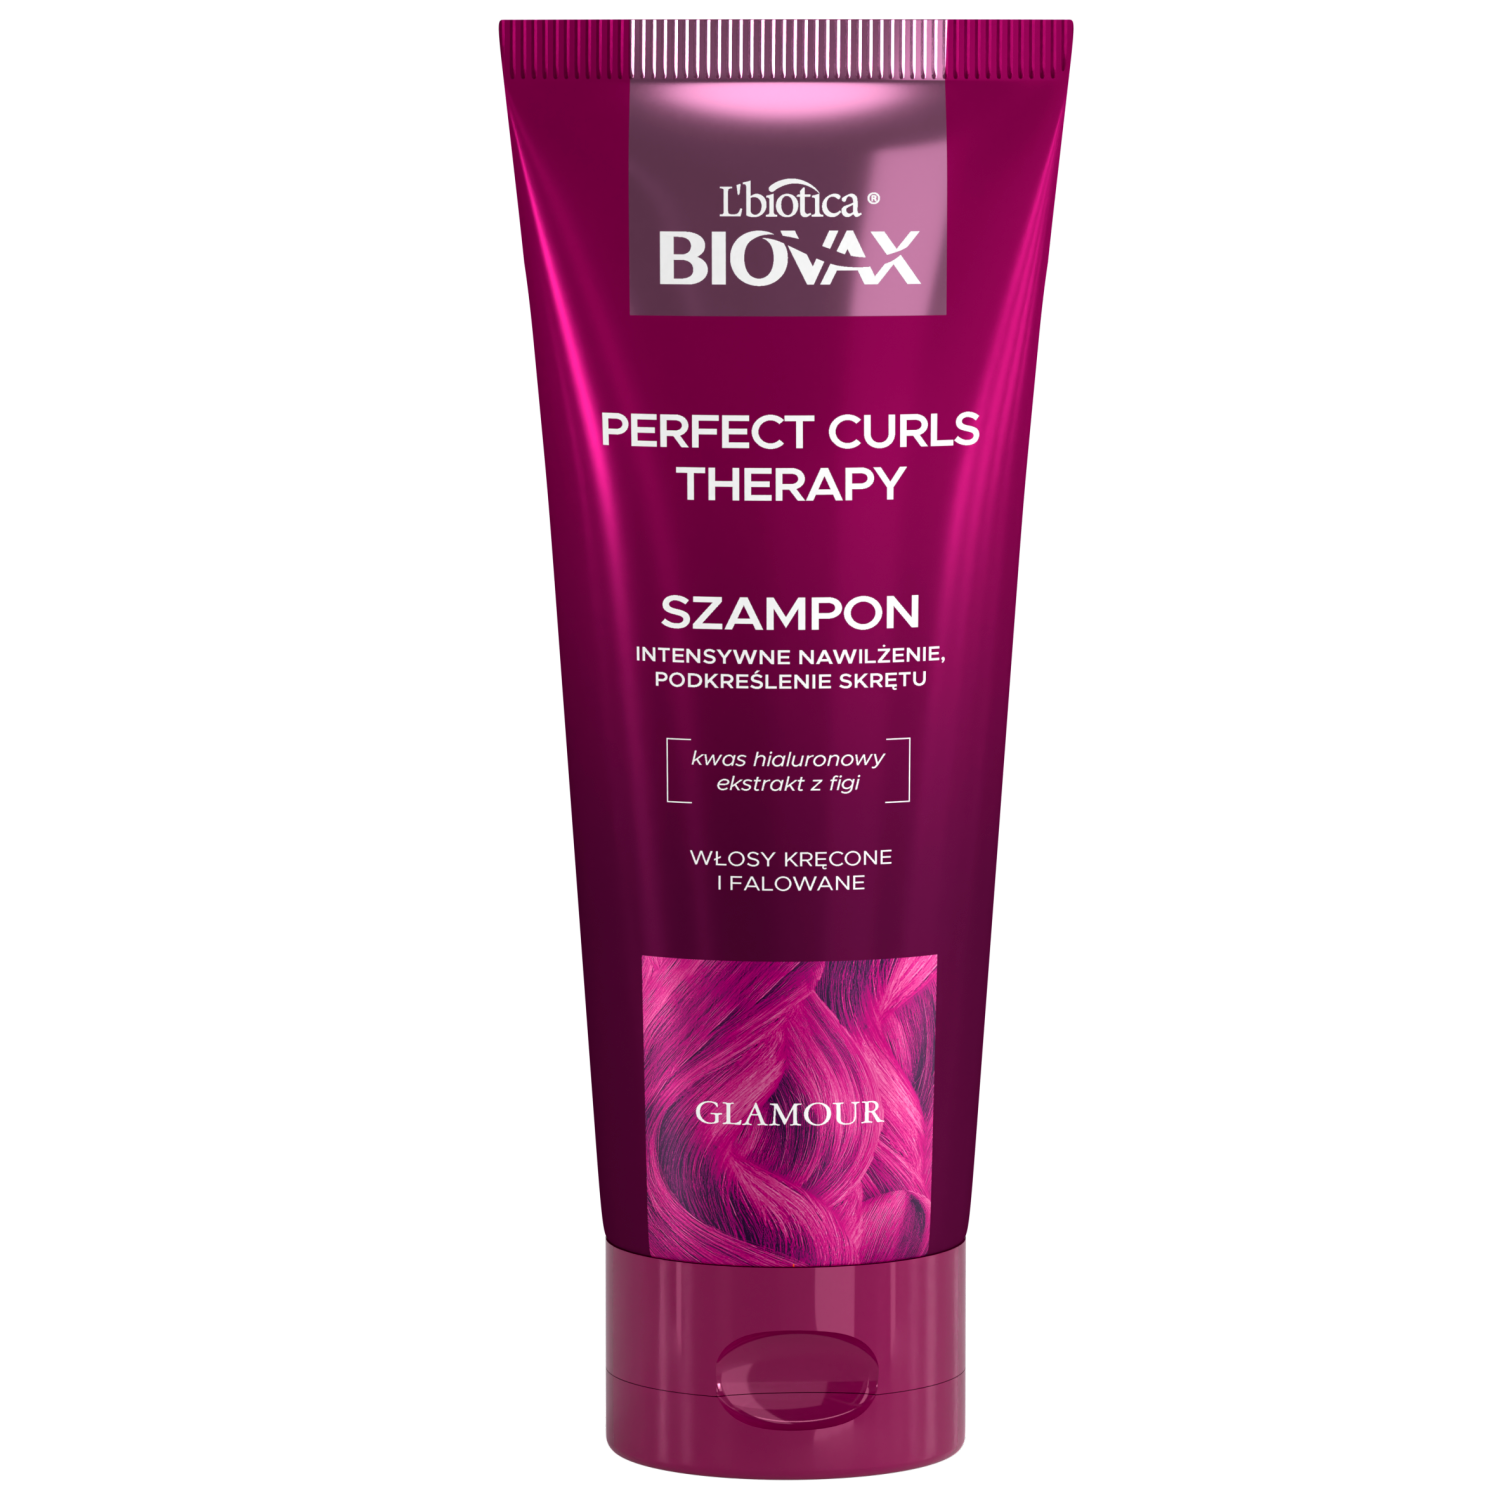 Увлажняющий шампунь для вьющихся волос Biovax Glamour Perfect Curls Therapy, 200 мл цена и фото